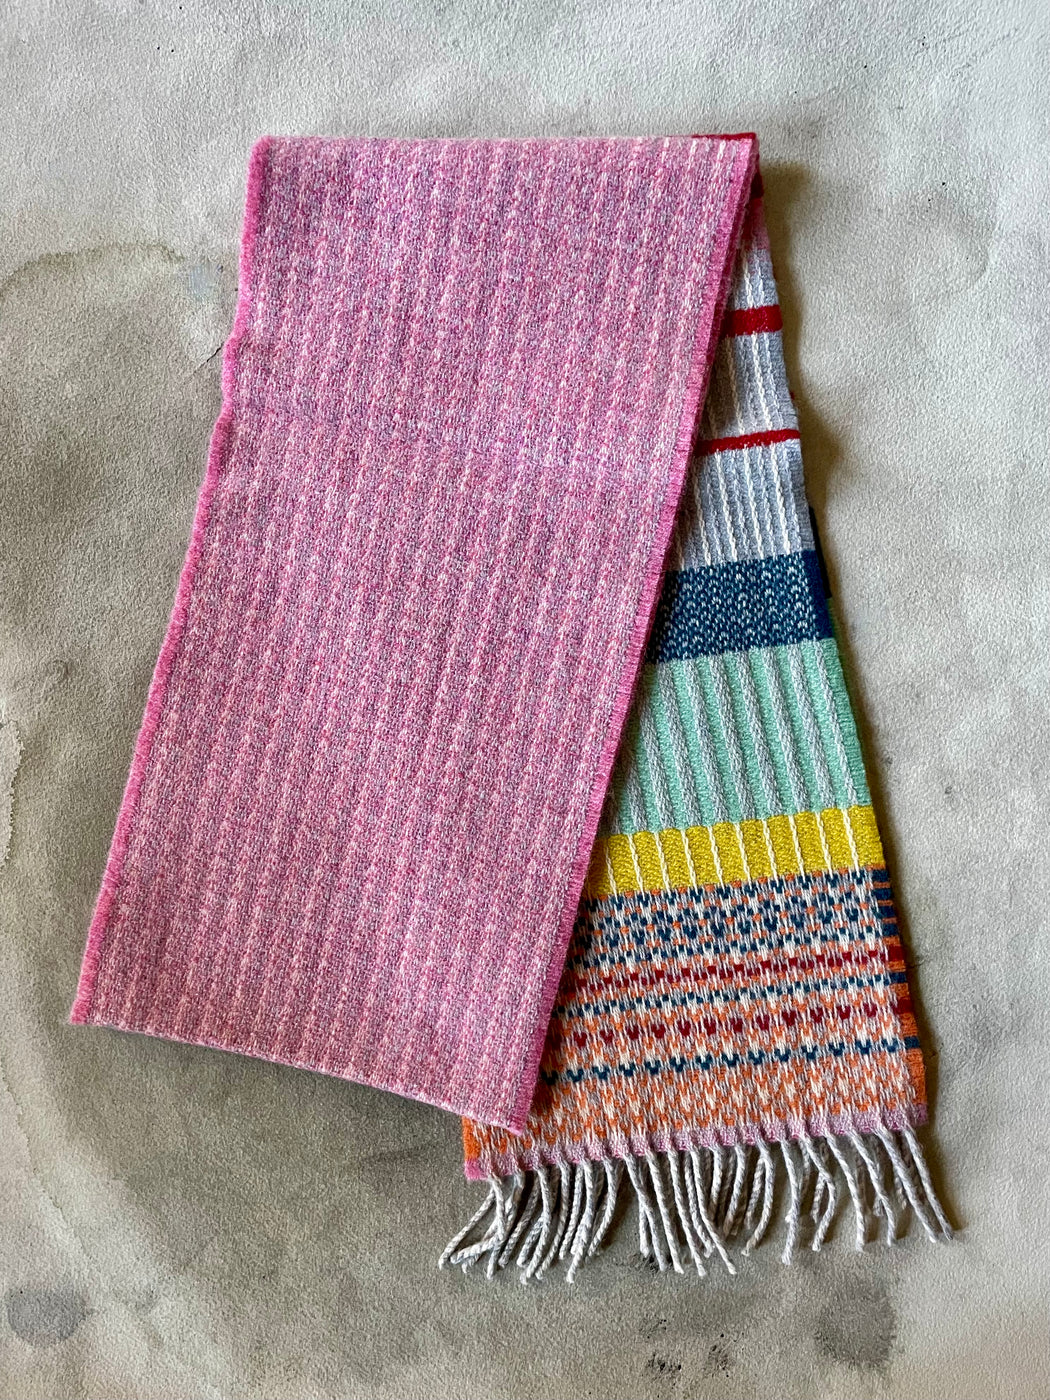 Wallace Sewell "Kyoto" Merino Wool Scarf - Pink